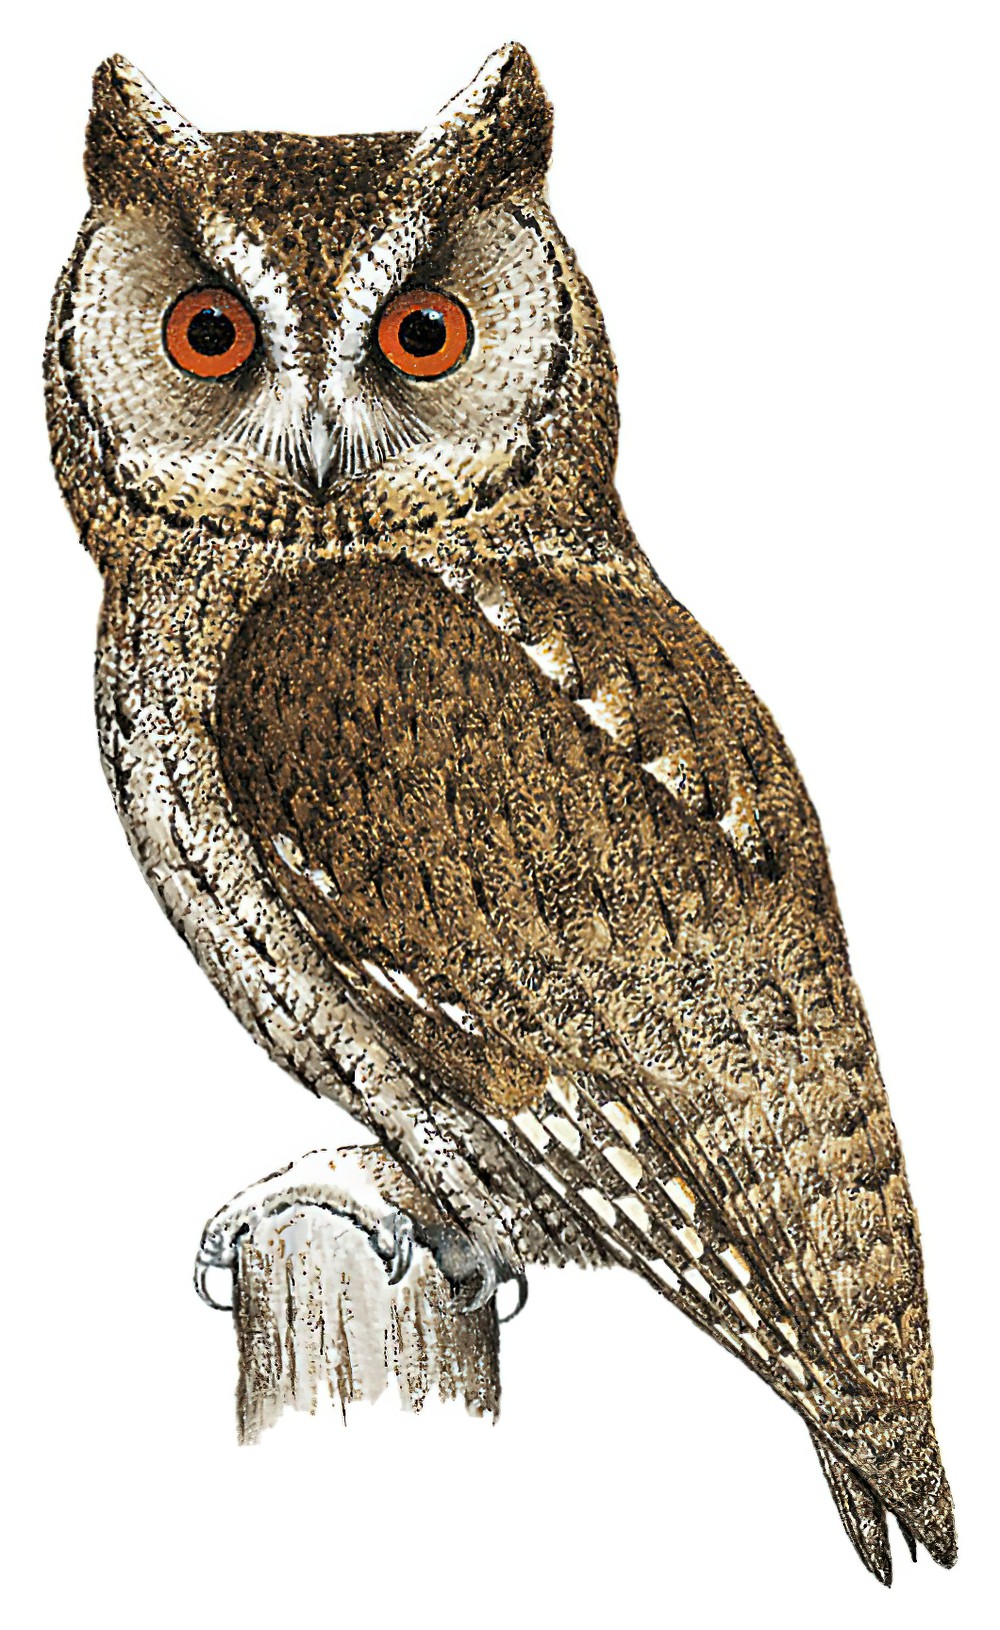 Japanese Scops-Owl / Otus semitorques